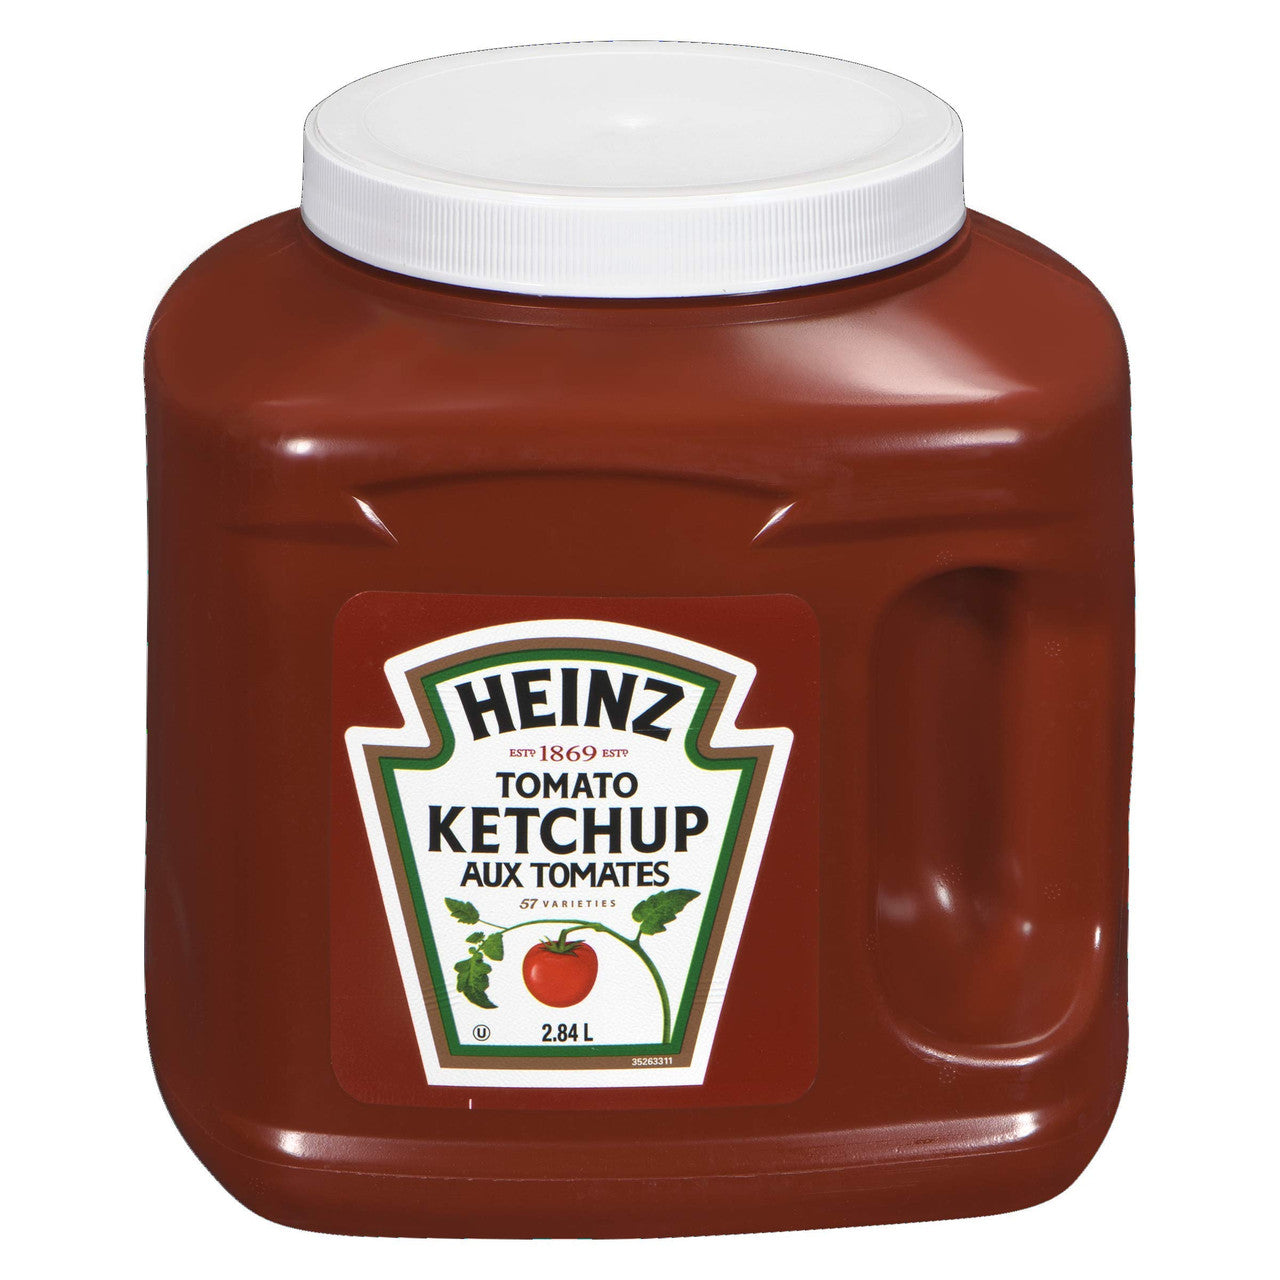  Heinz Tomato Ketchup, 57ml/1.9 fl. oz., Mini Bottles